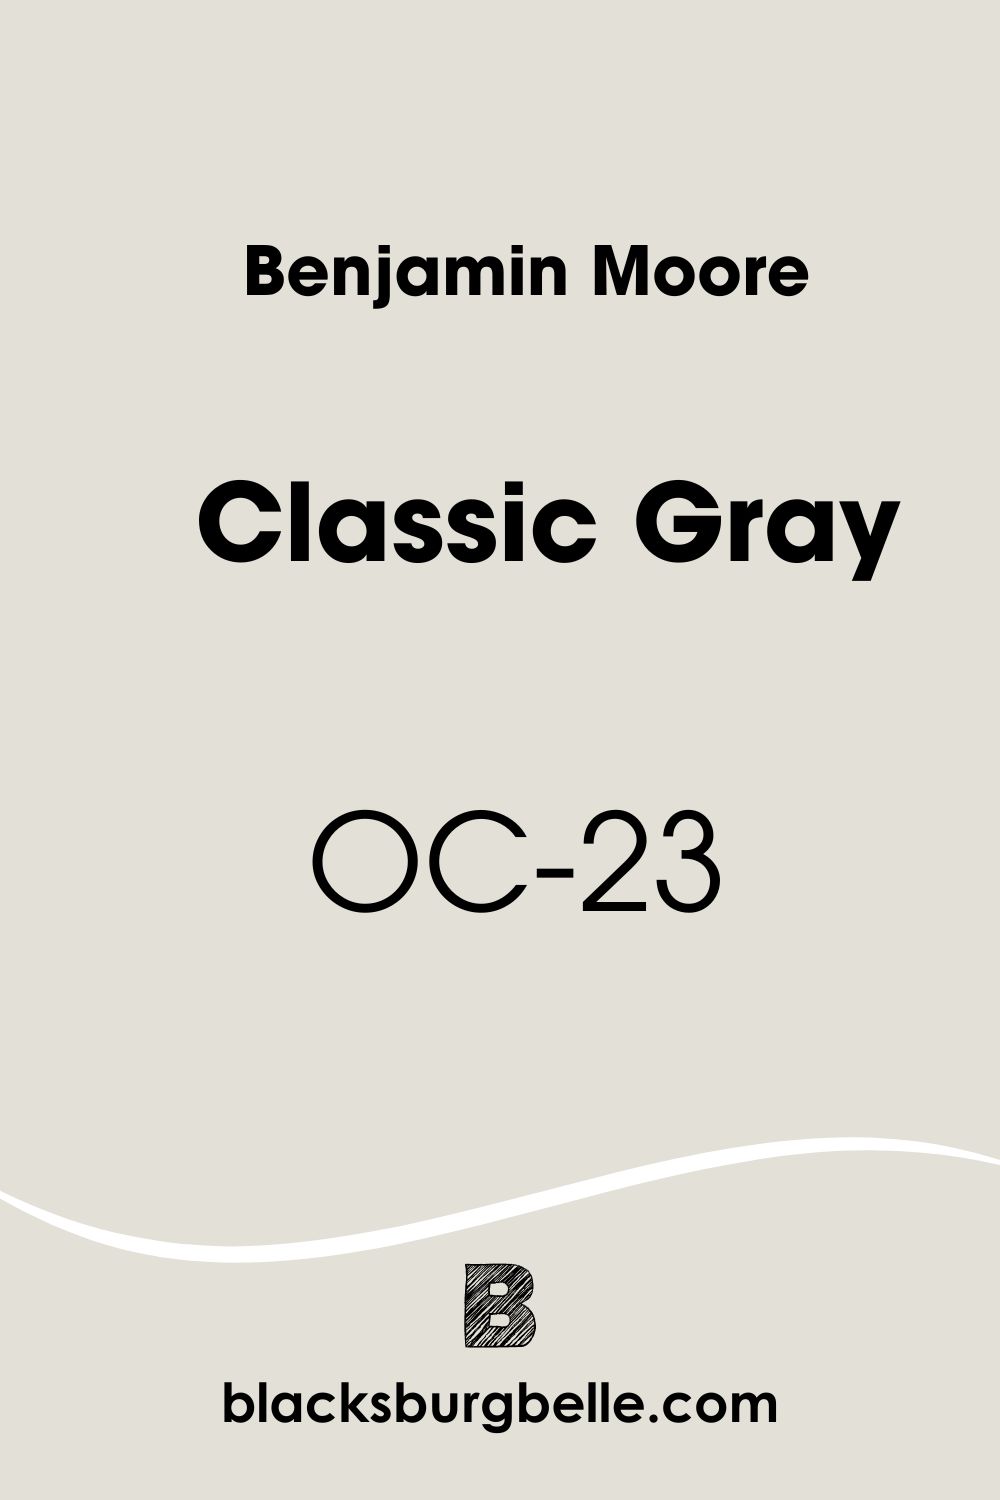 Benjamin Moore Classic Gray OC-23 